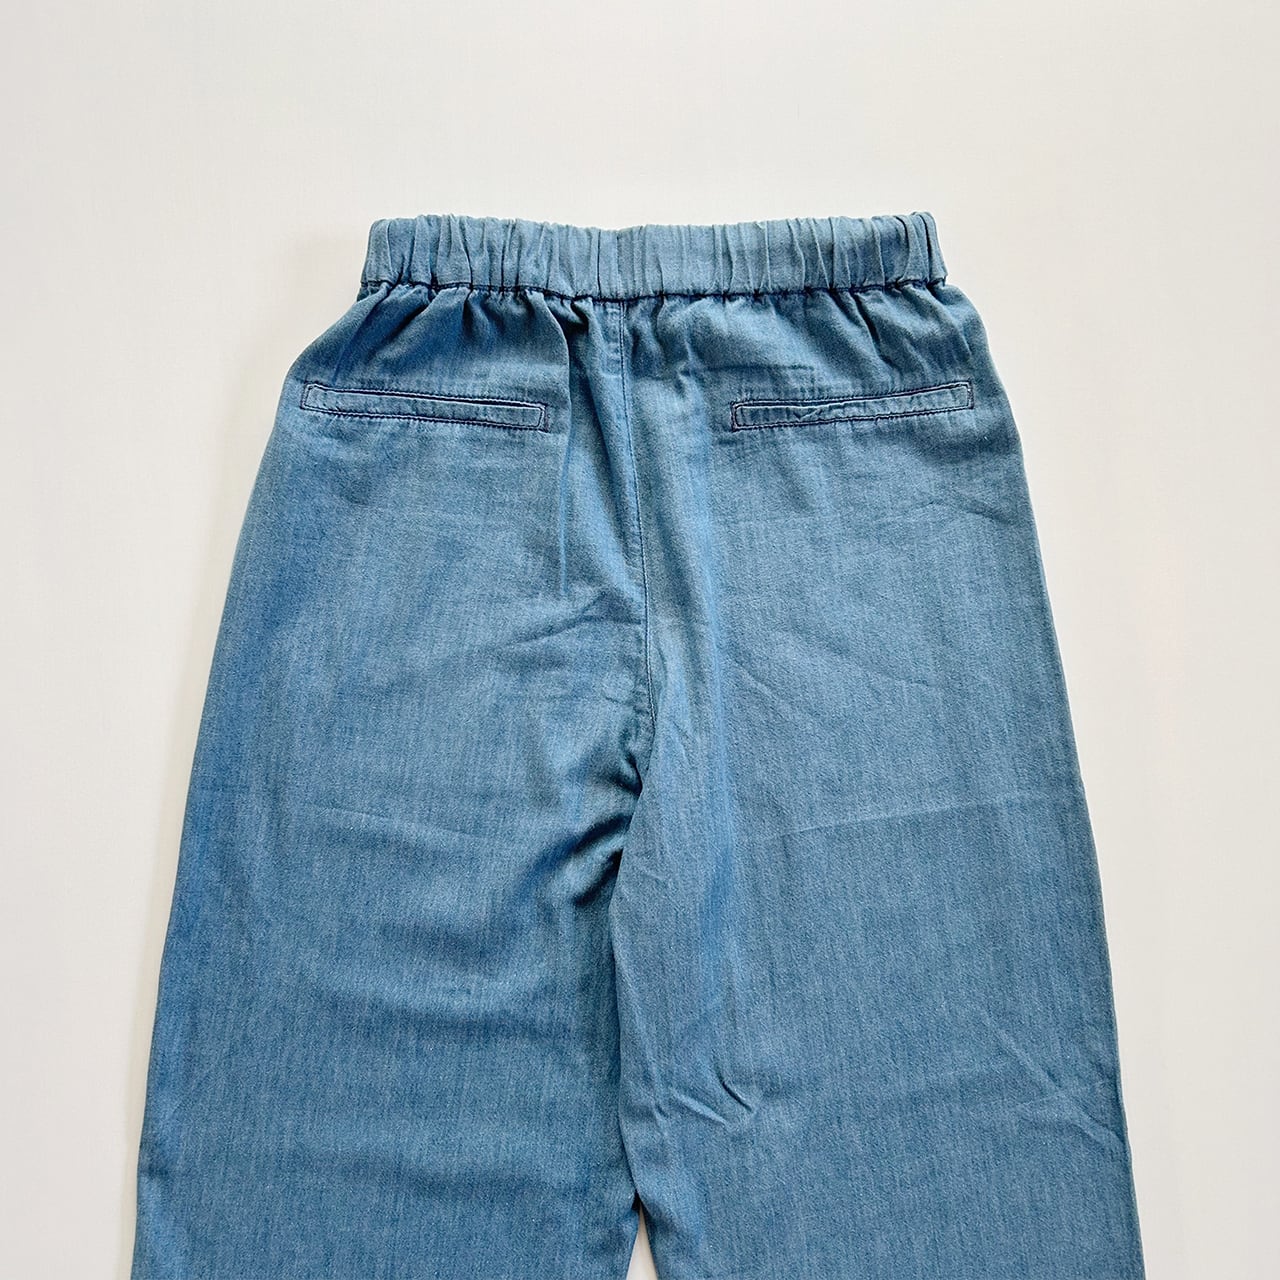 Chambray easy pants (blue)